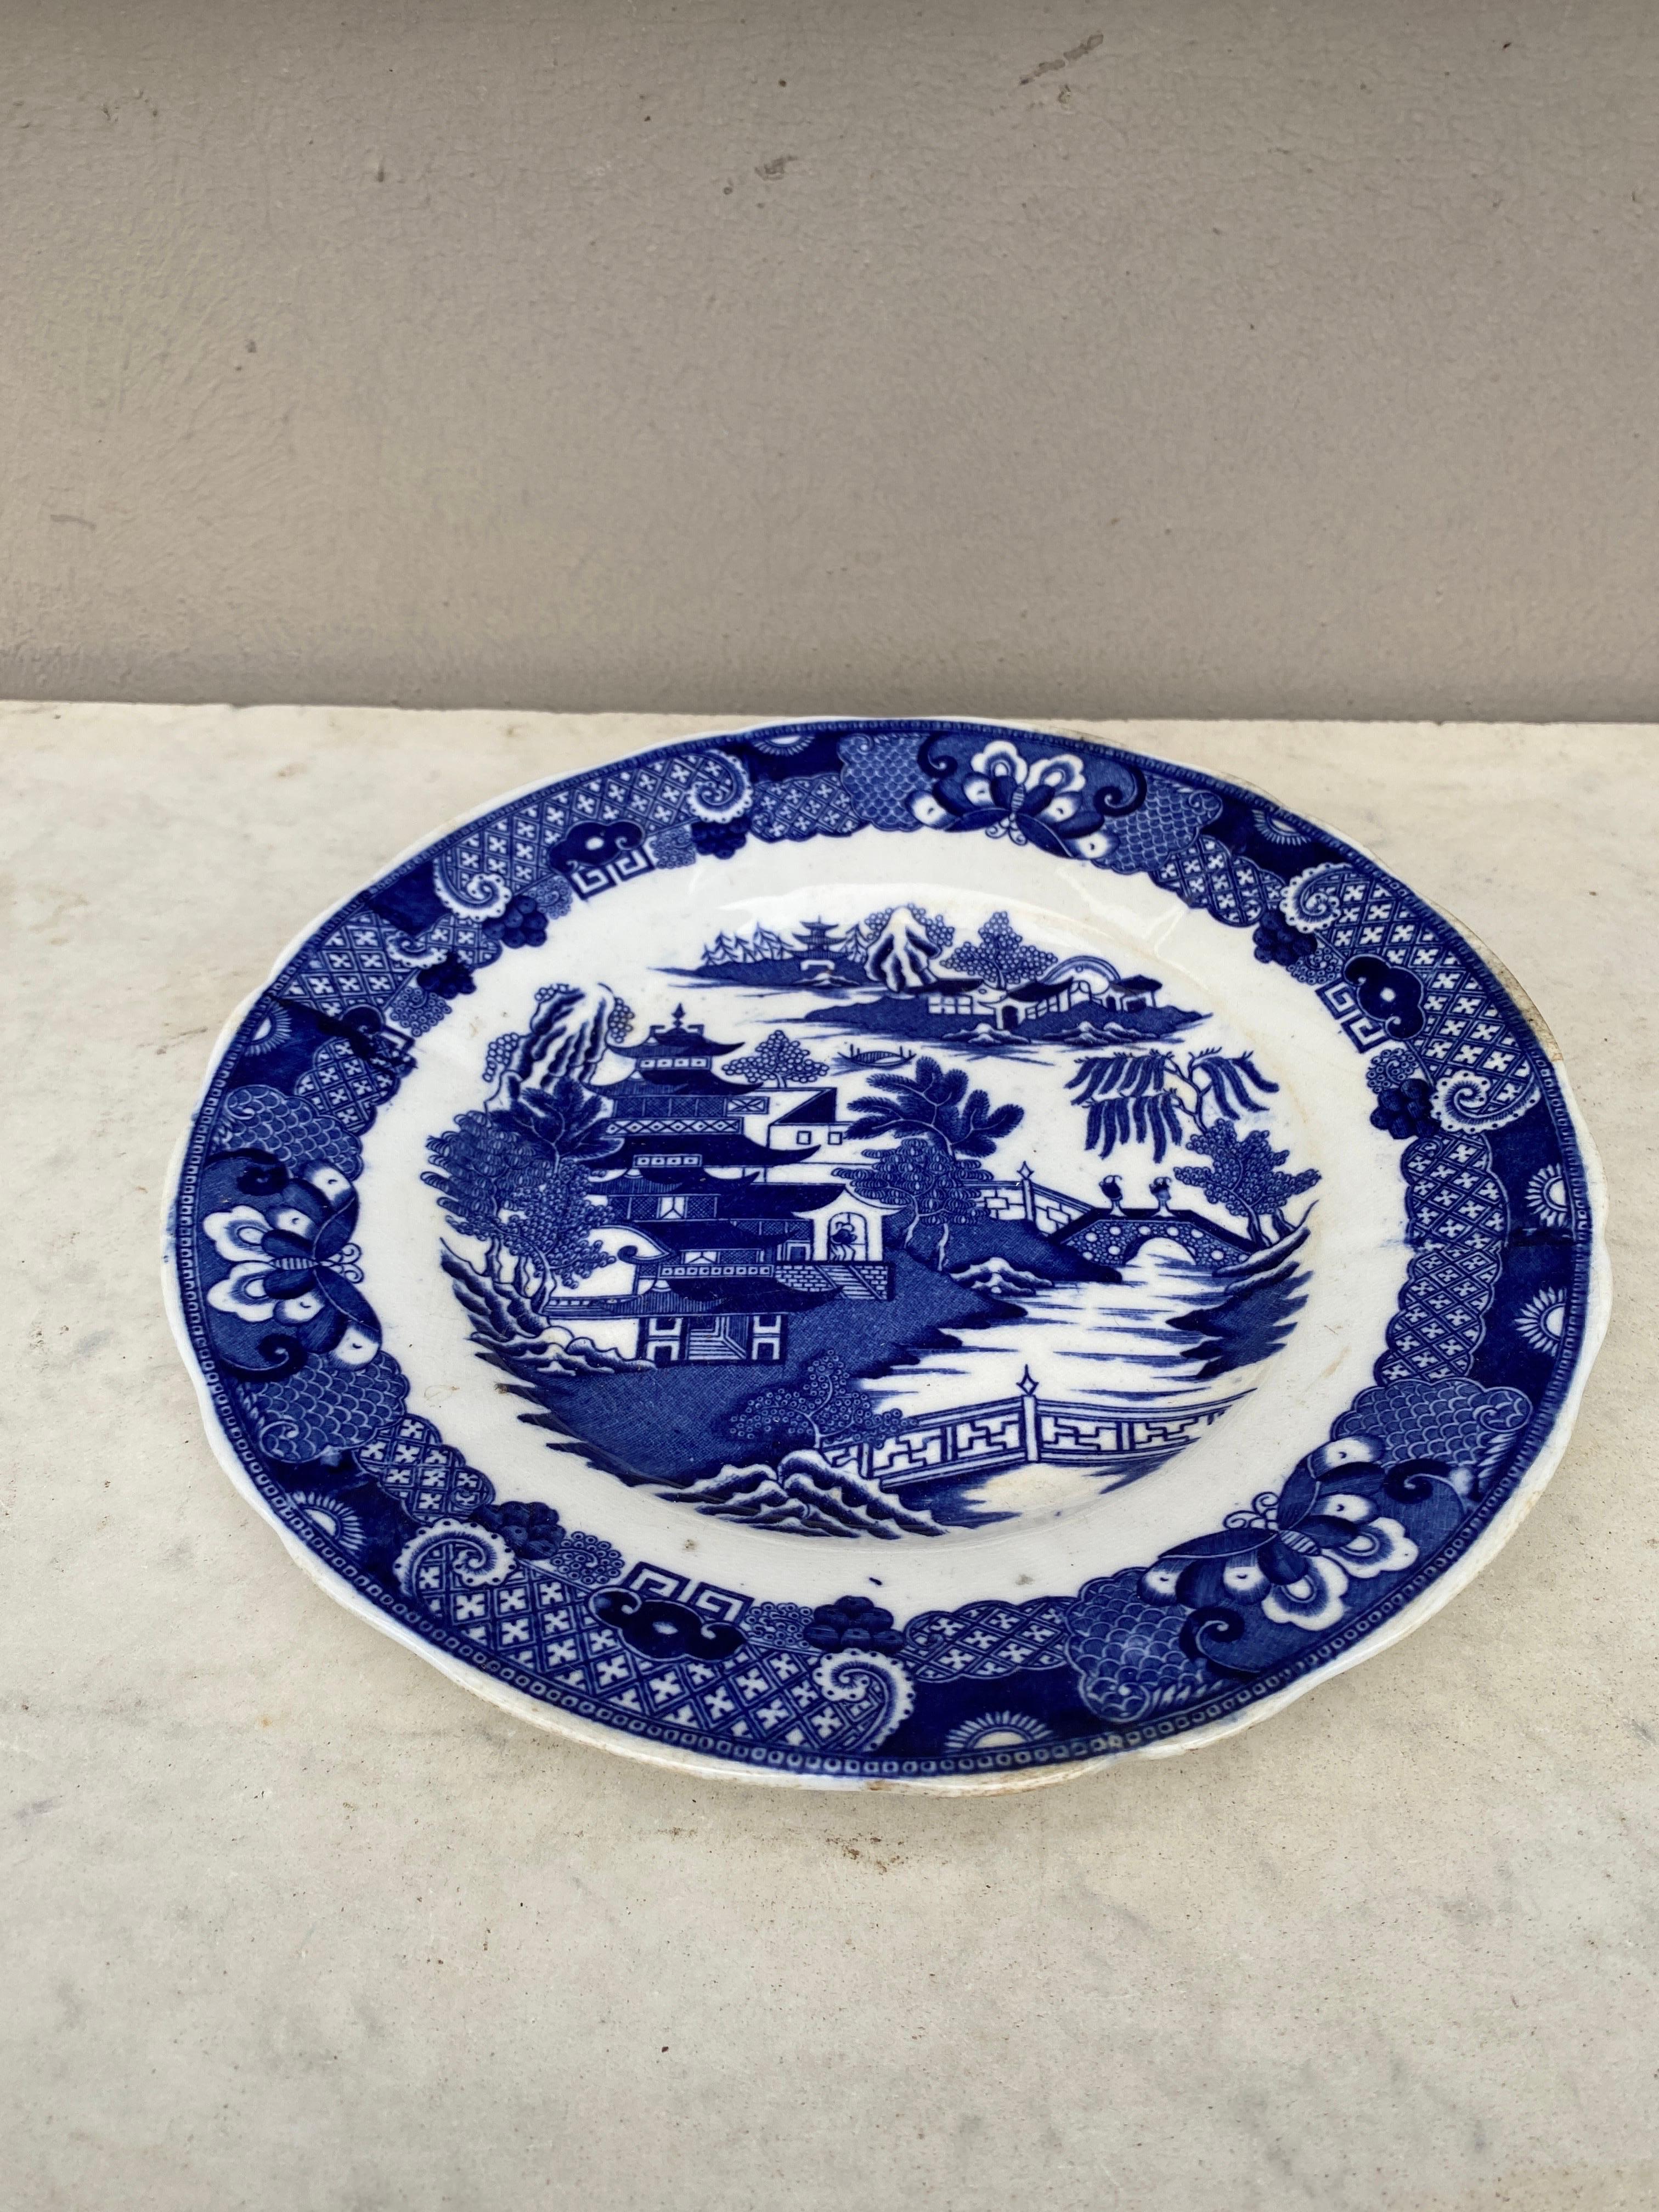 19th Century English Chinoiserie blue & white plate.
9.5 inches diameter.